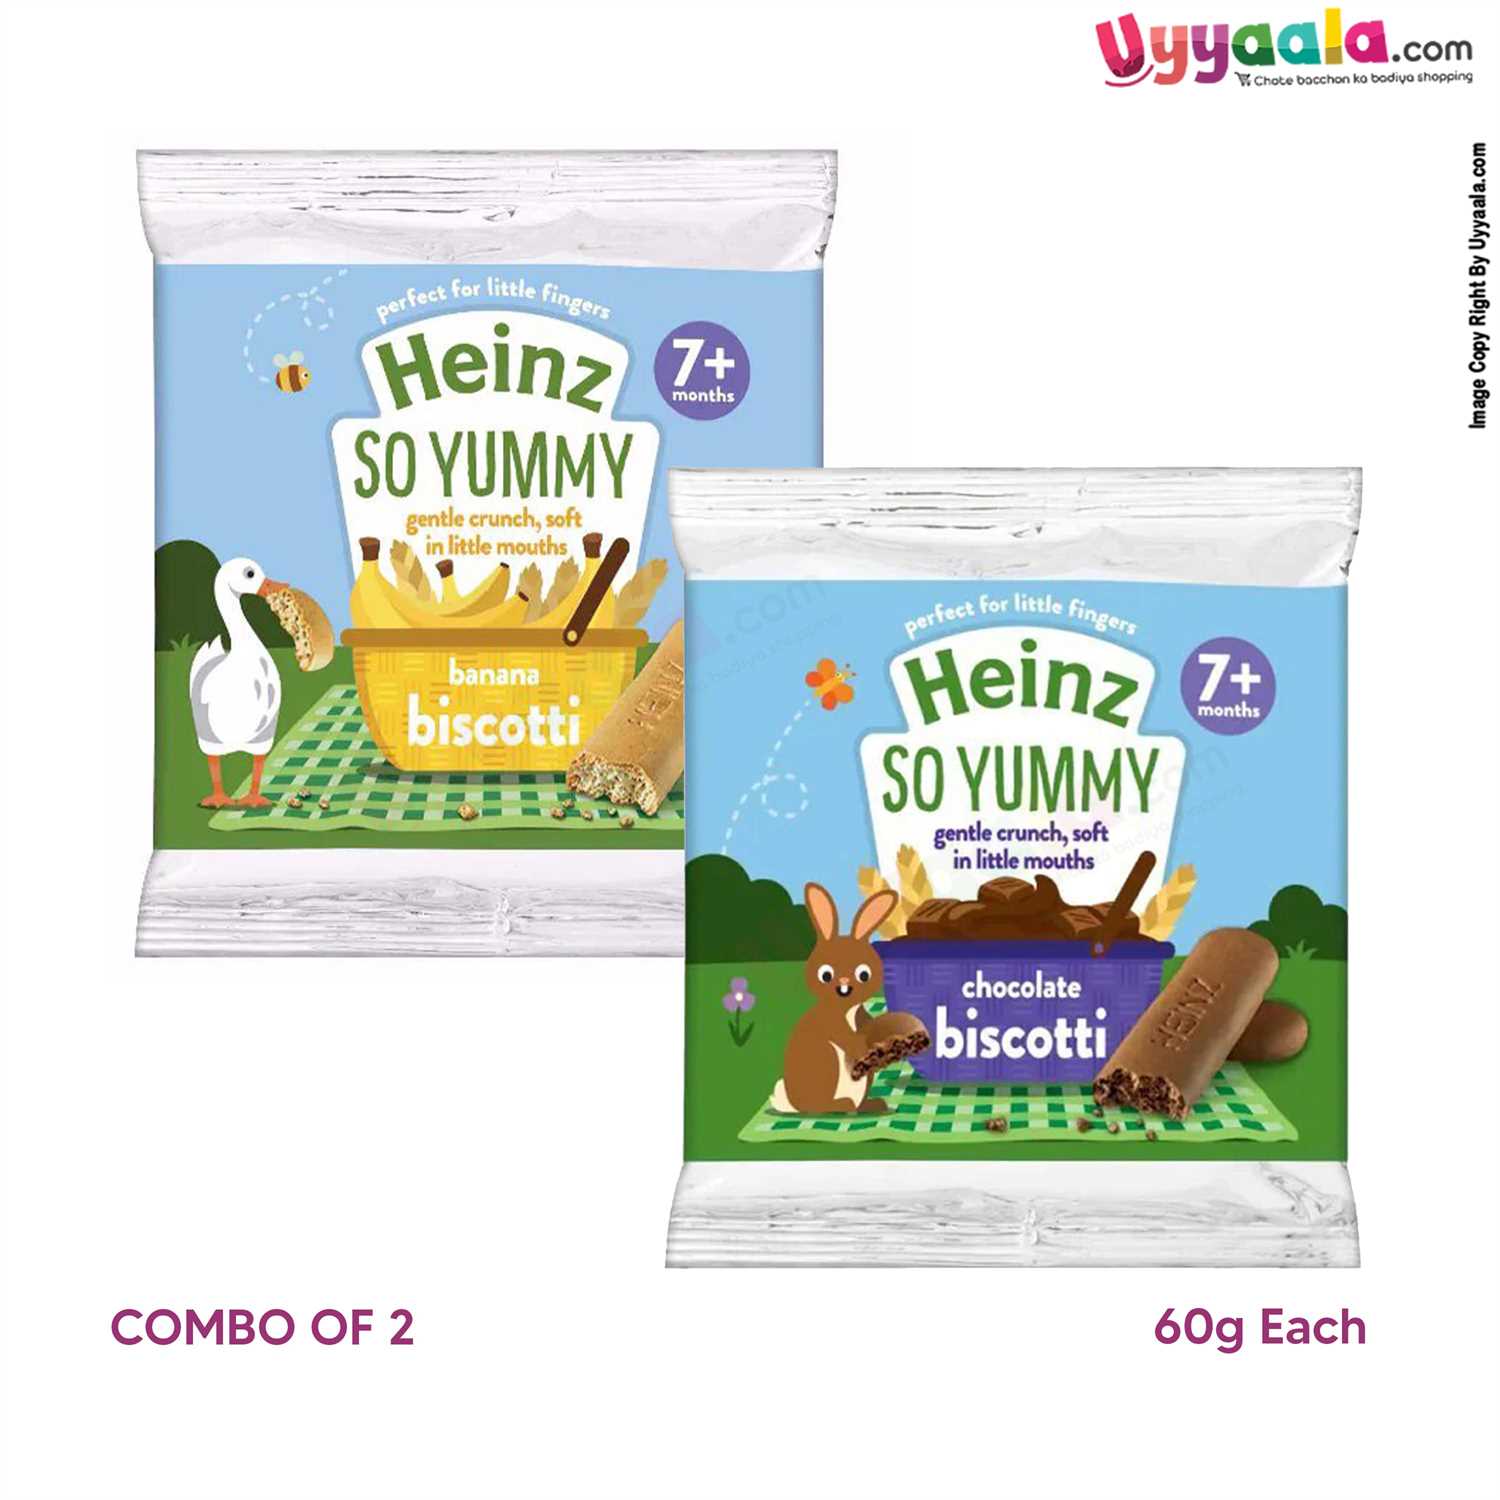 HEINZ SO YUMMY Banana & Chocolate biscotti for Kids snacks Combo of 2 - Banana & Chocolate Biscuits (60 g each)